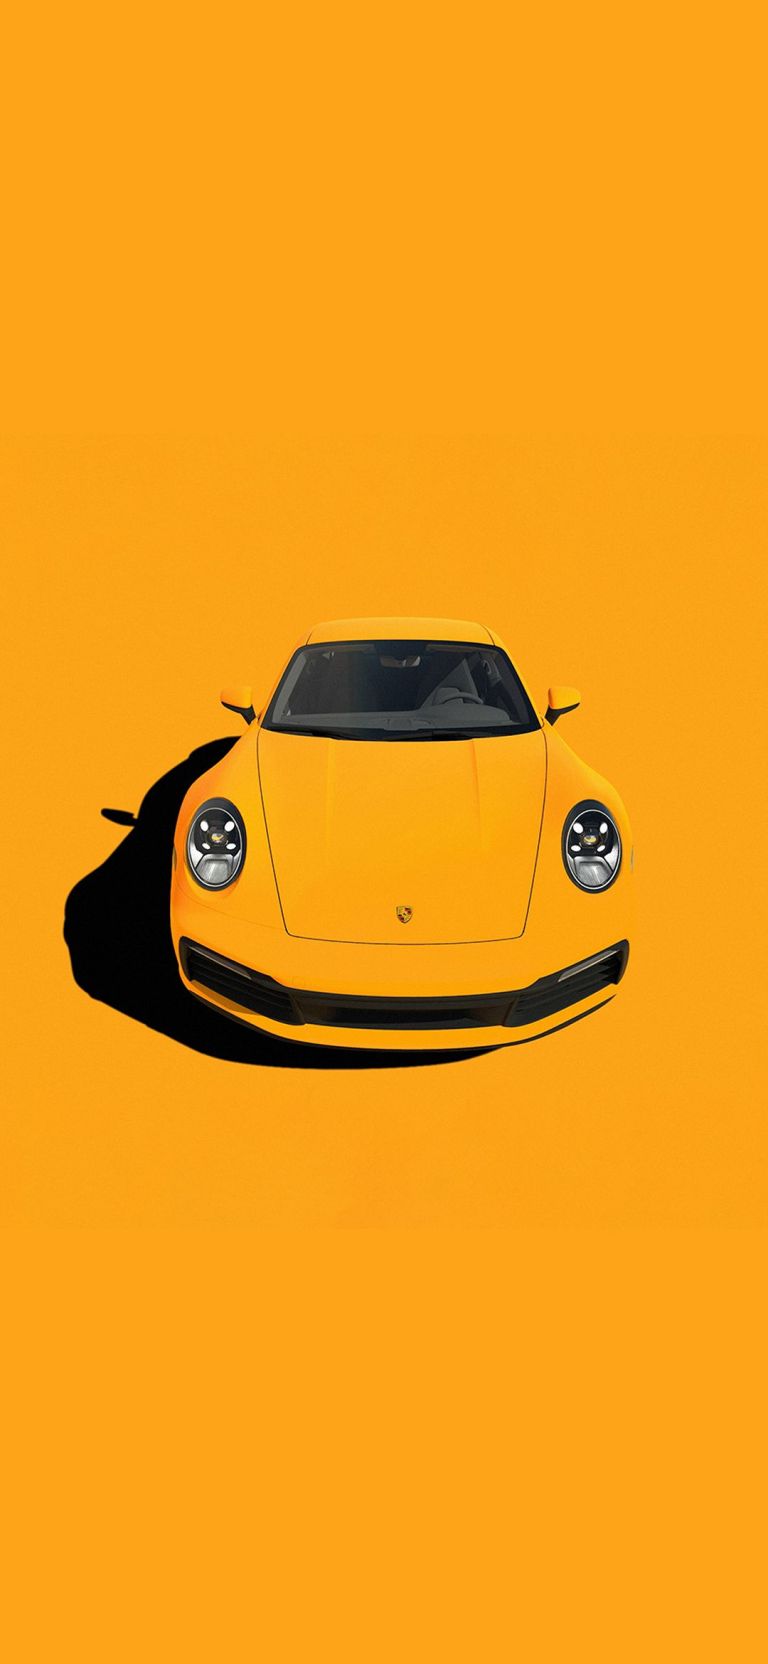 Porsche 911 Yellow 4K Wallpaper Download for iPhone